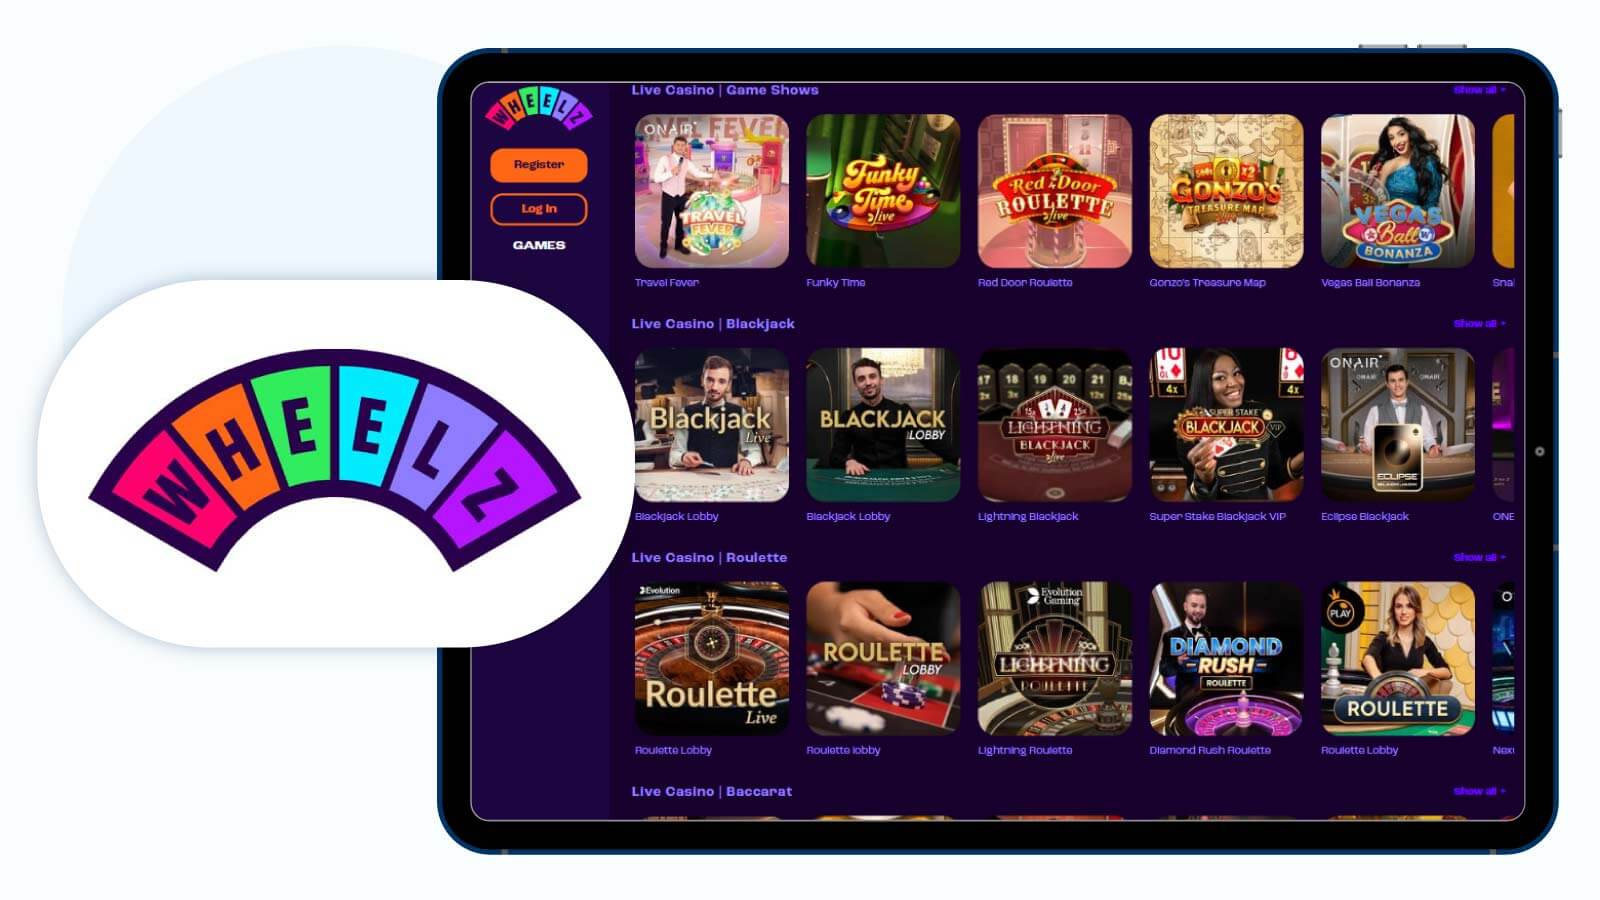 Wheelz-Casino-Best-Live-Dealer-Casino-for-Game-Shows